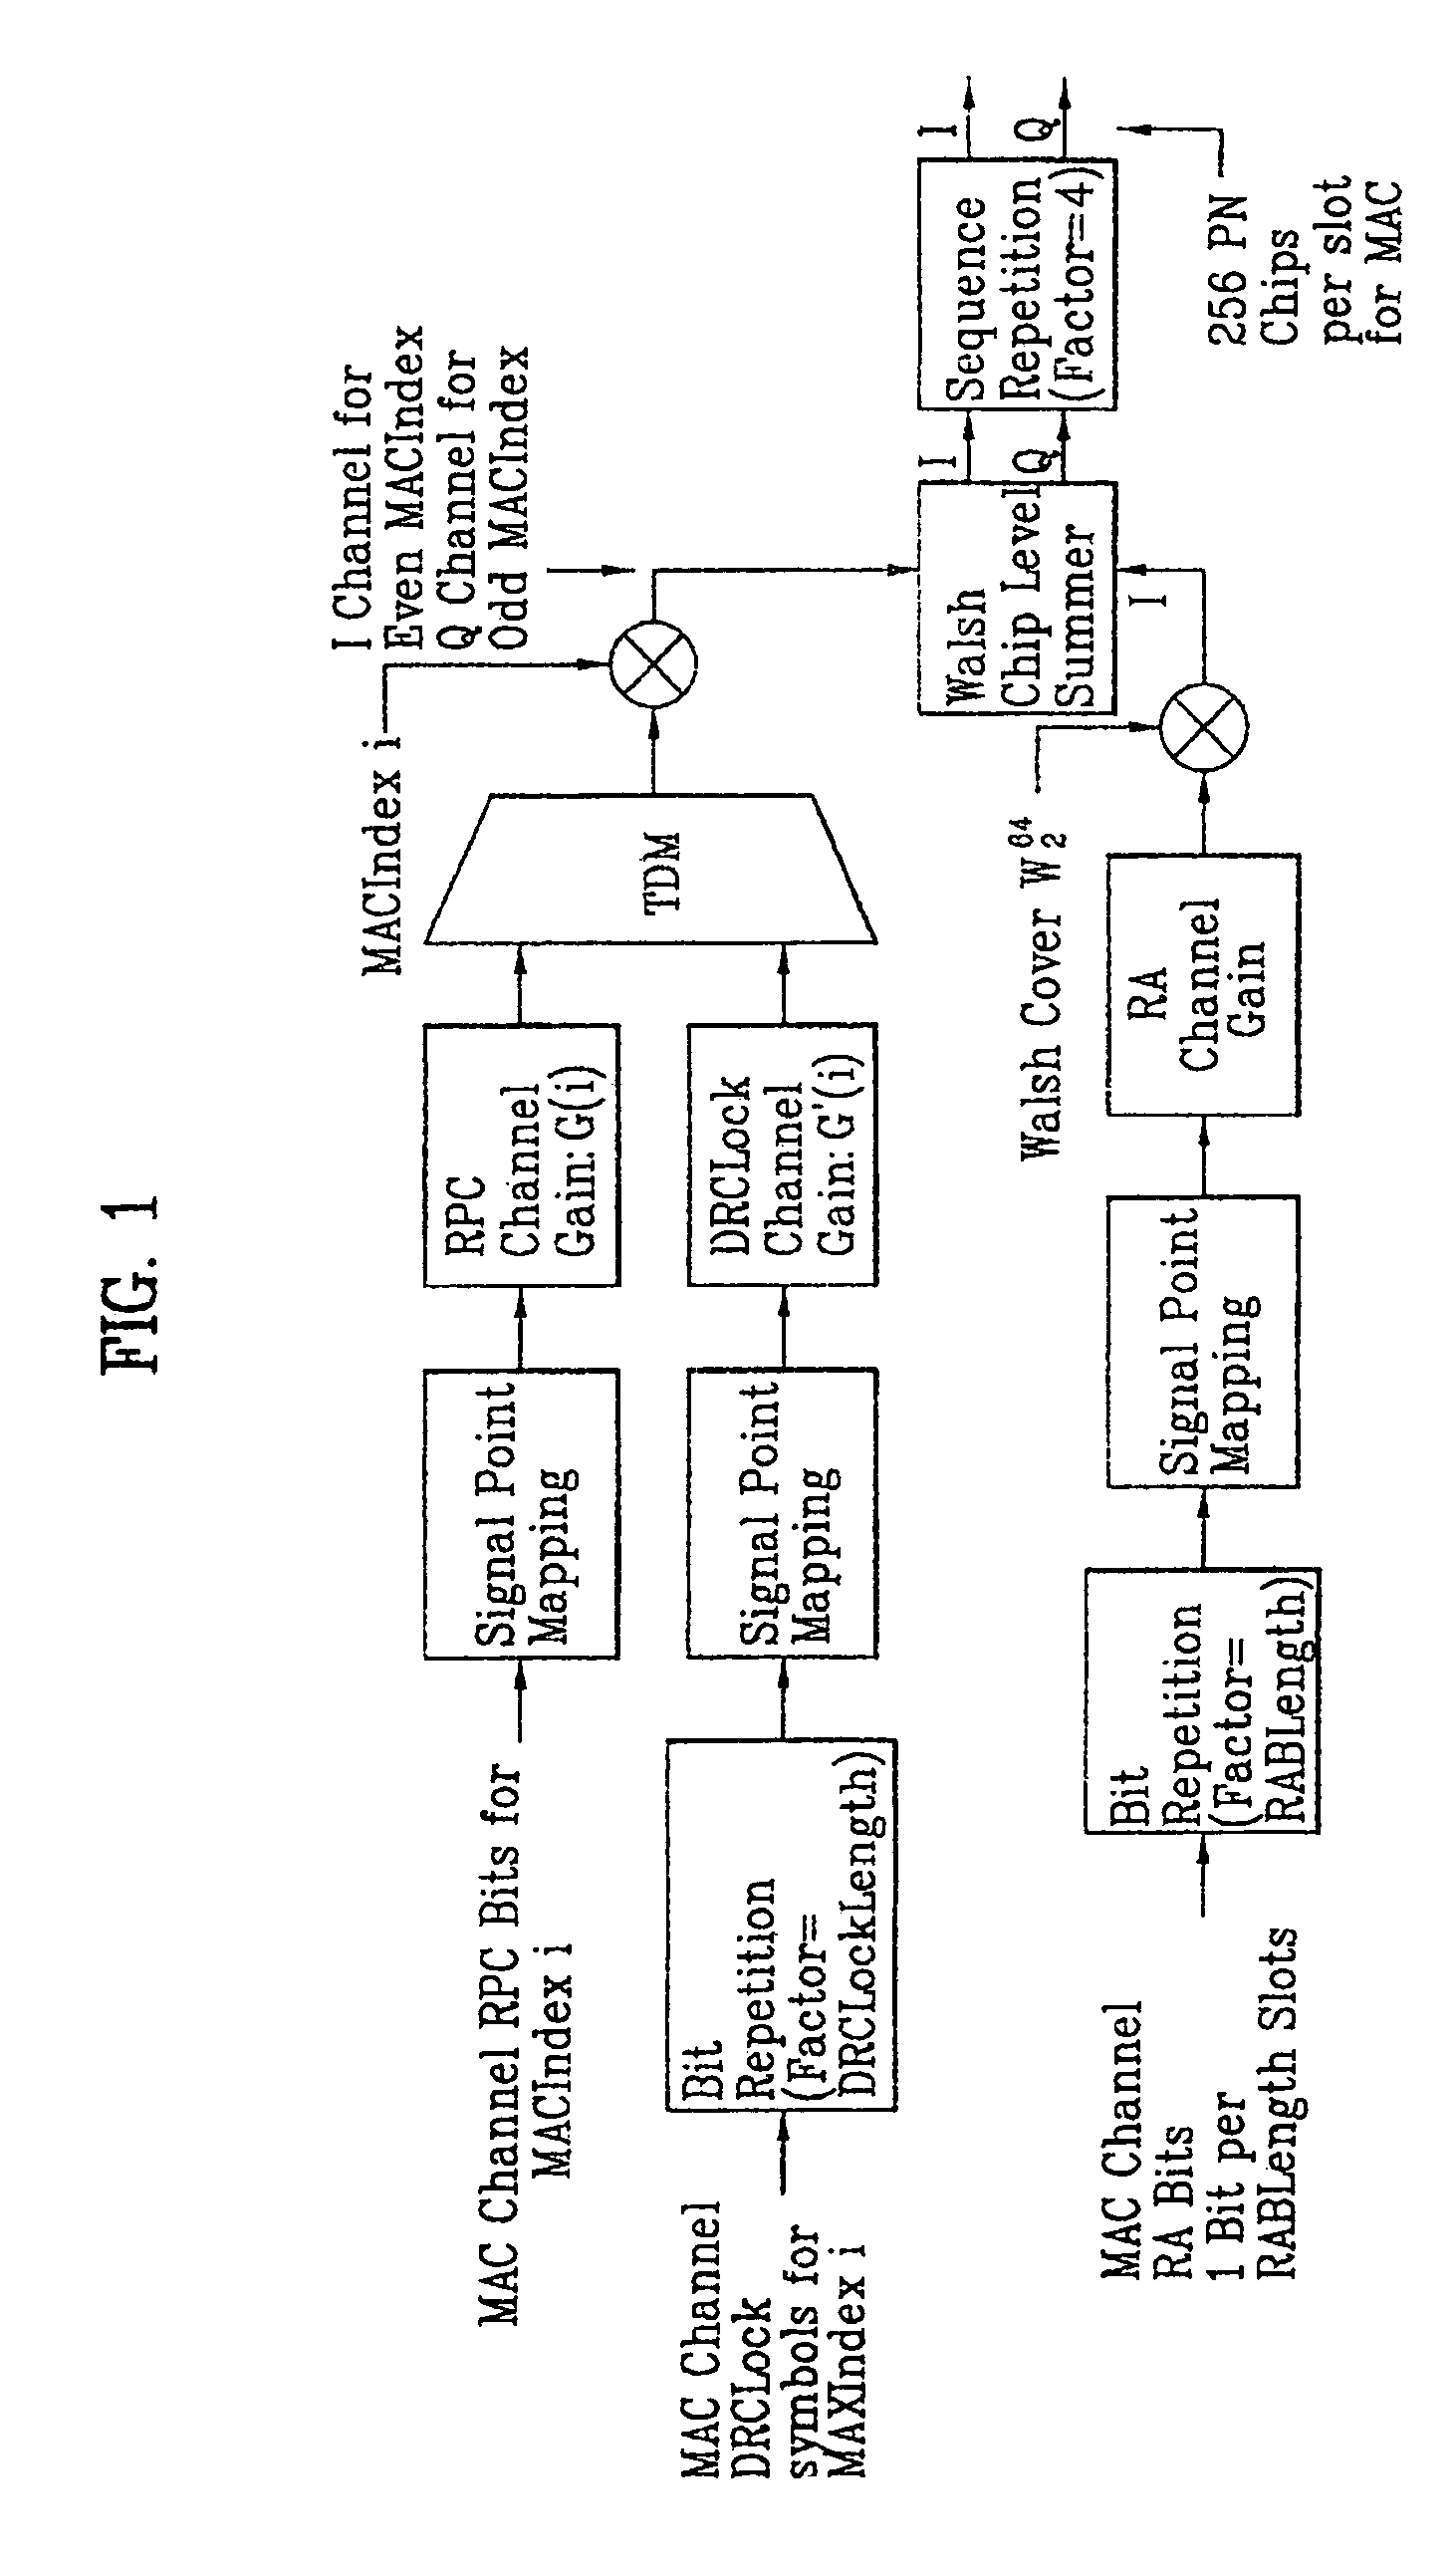 Method of transmitting control information for reverse link packet transmission